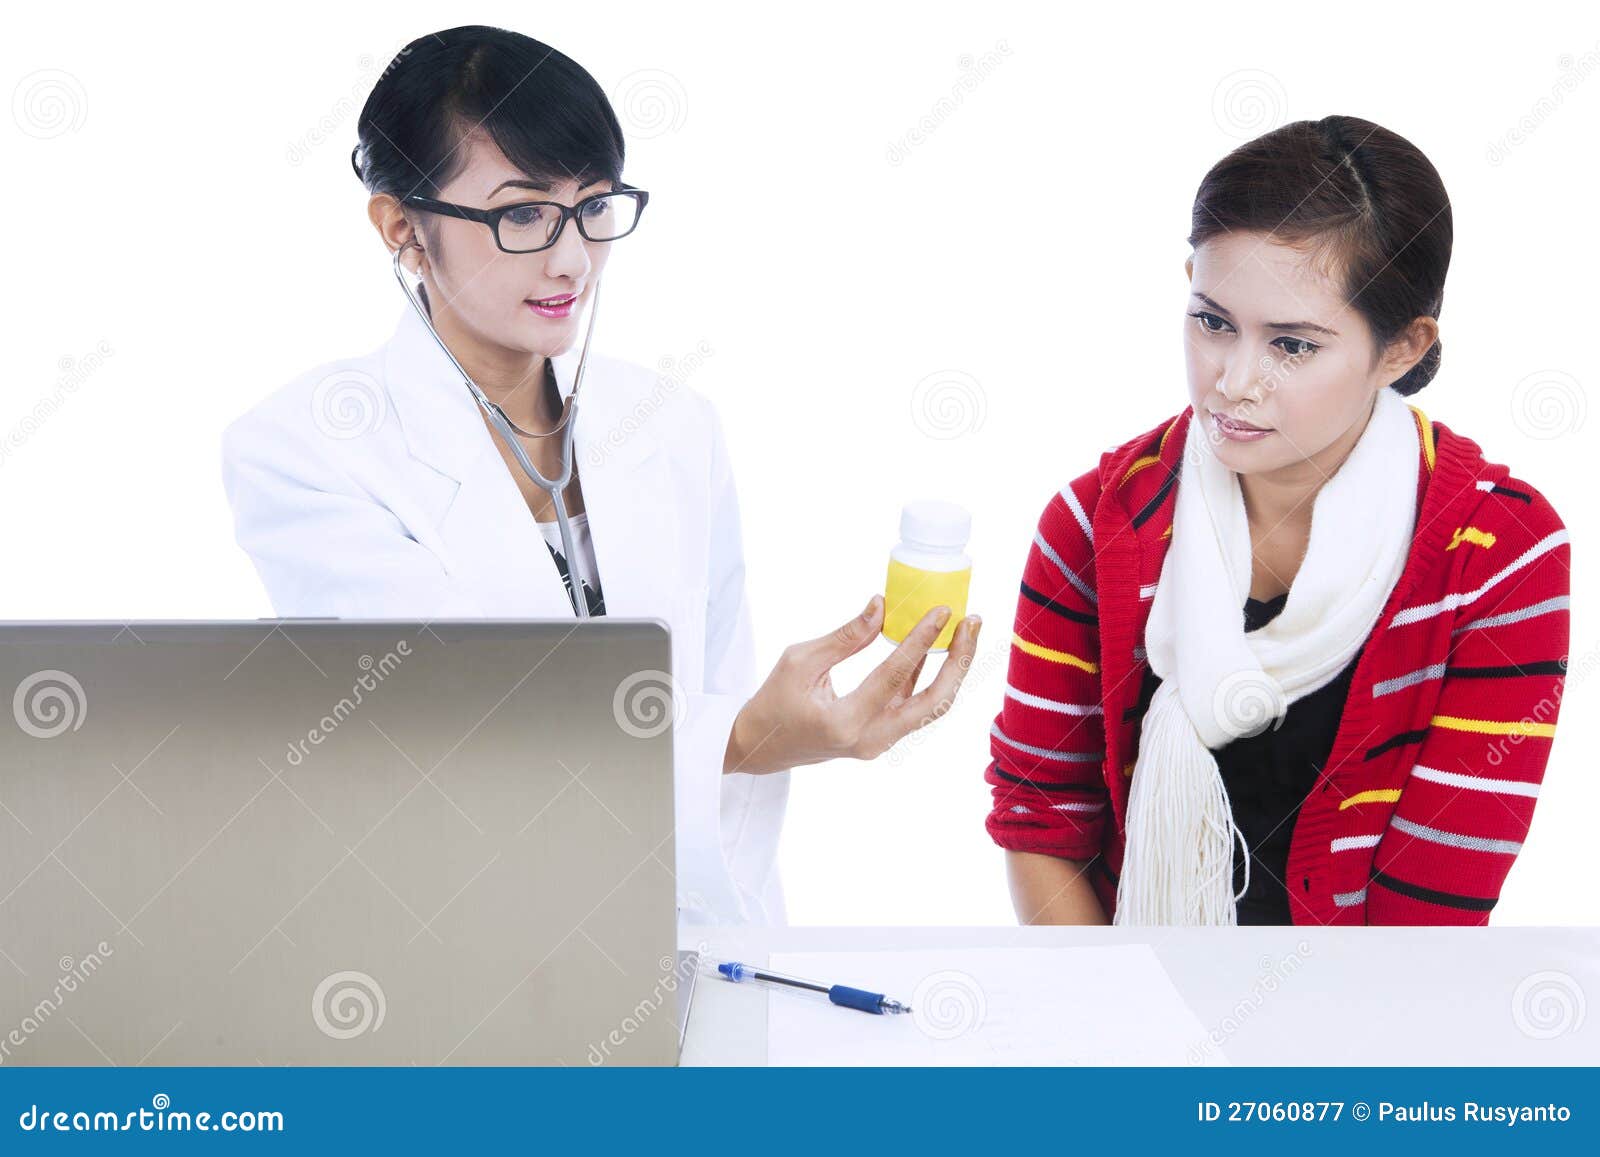 doctor explaining medicine dosage to patient